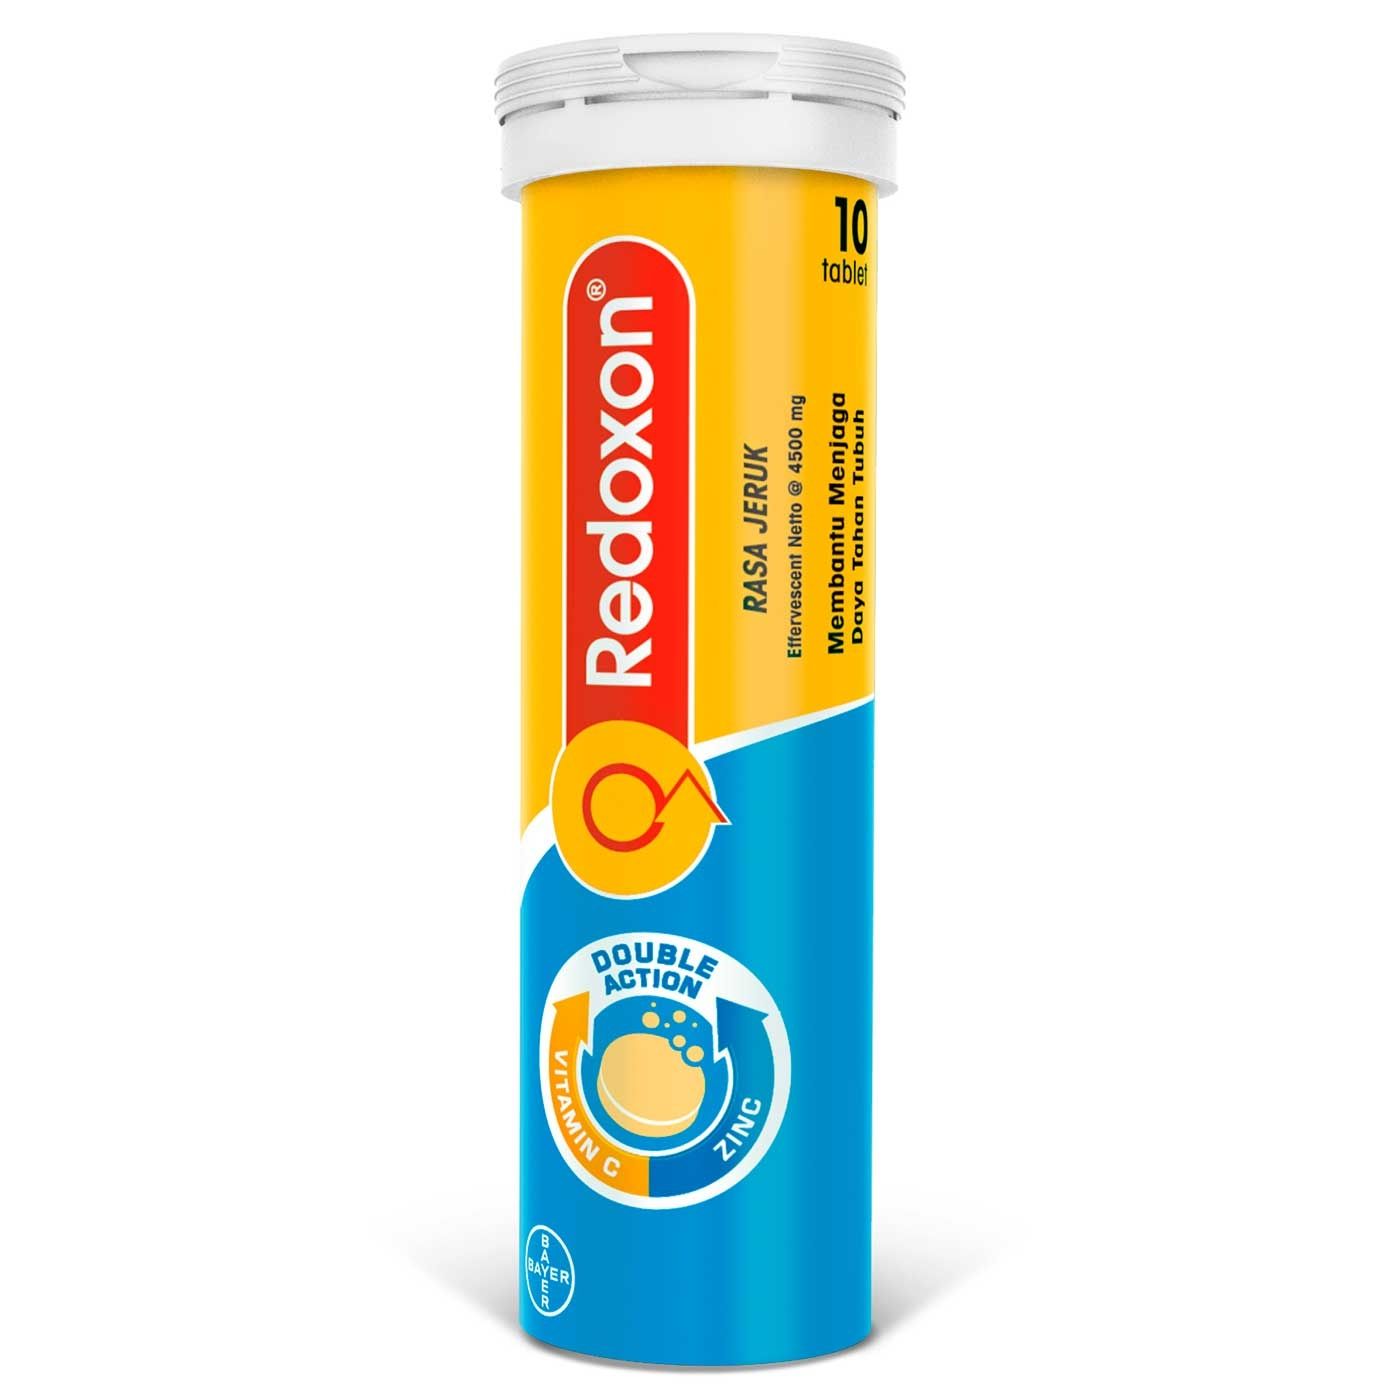 Redoxon Vitamin C + Zinc Rasa Jeruk 10 Tablet - 6